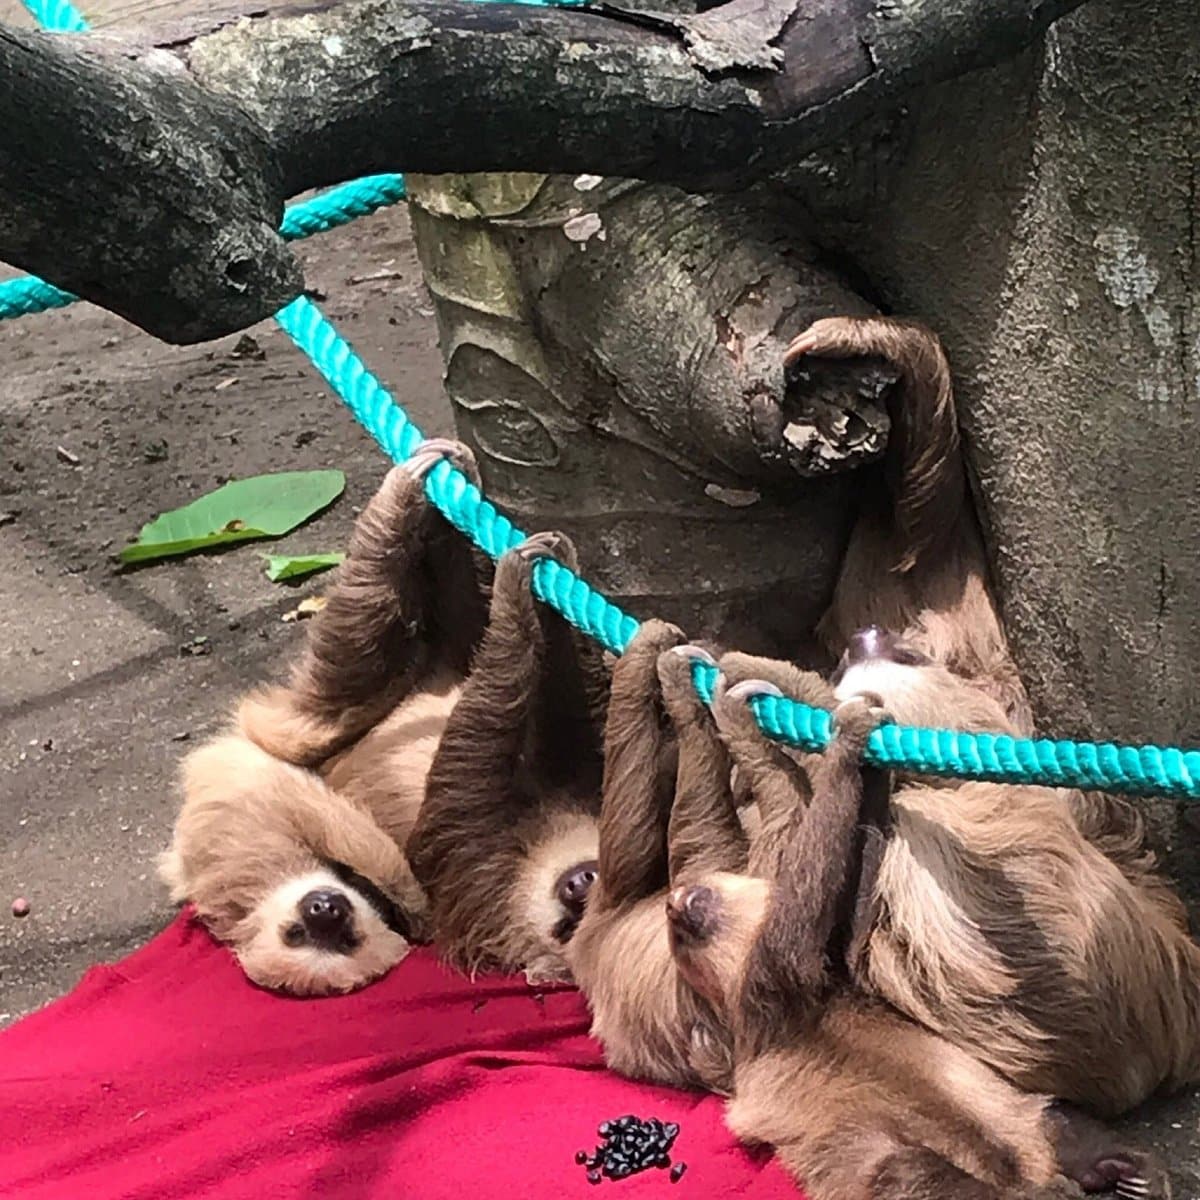 jaguar-reque-center-baby-sloths-rope